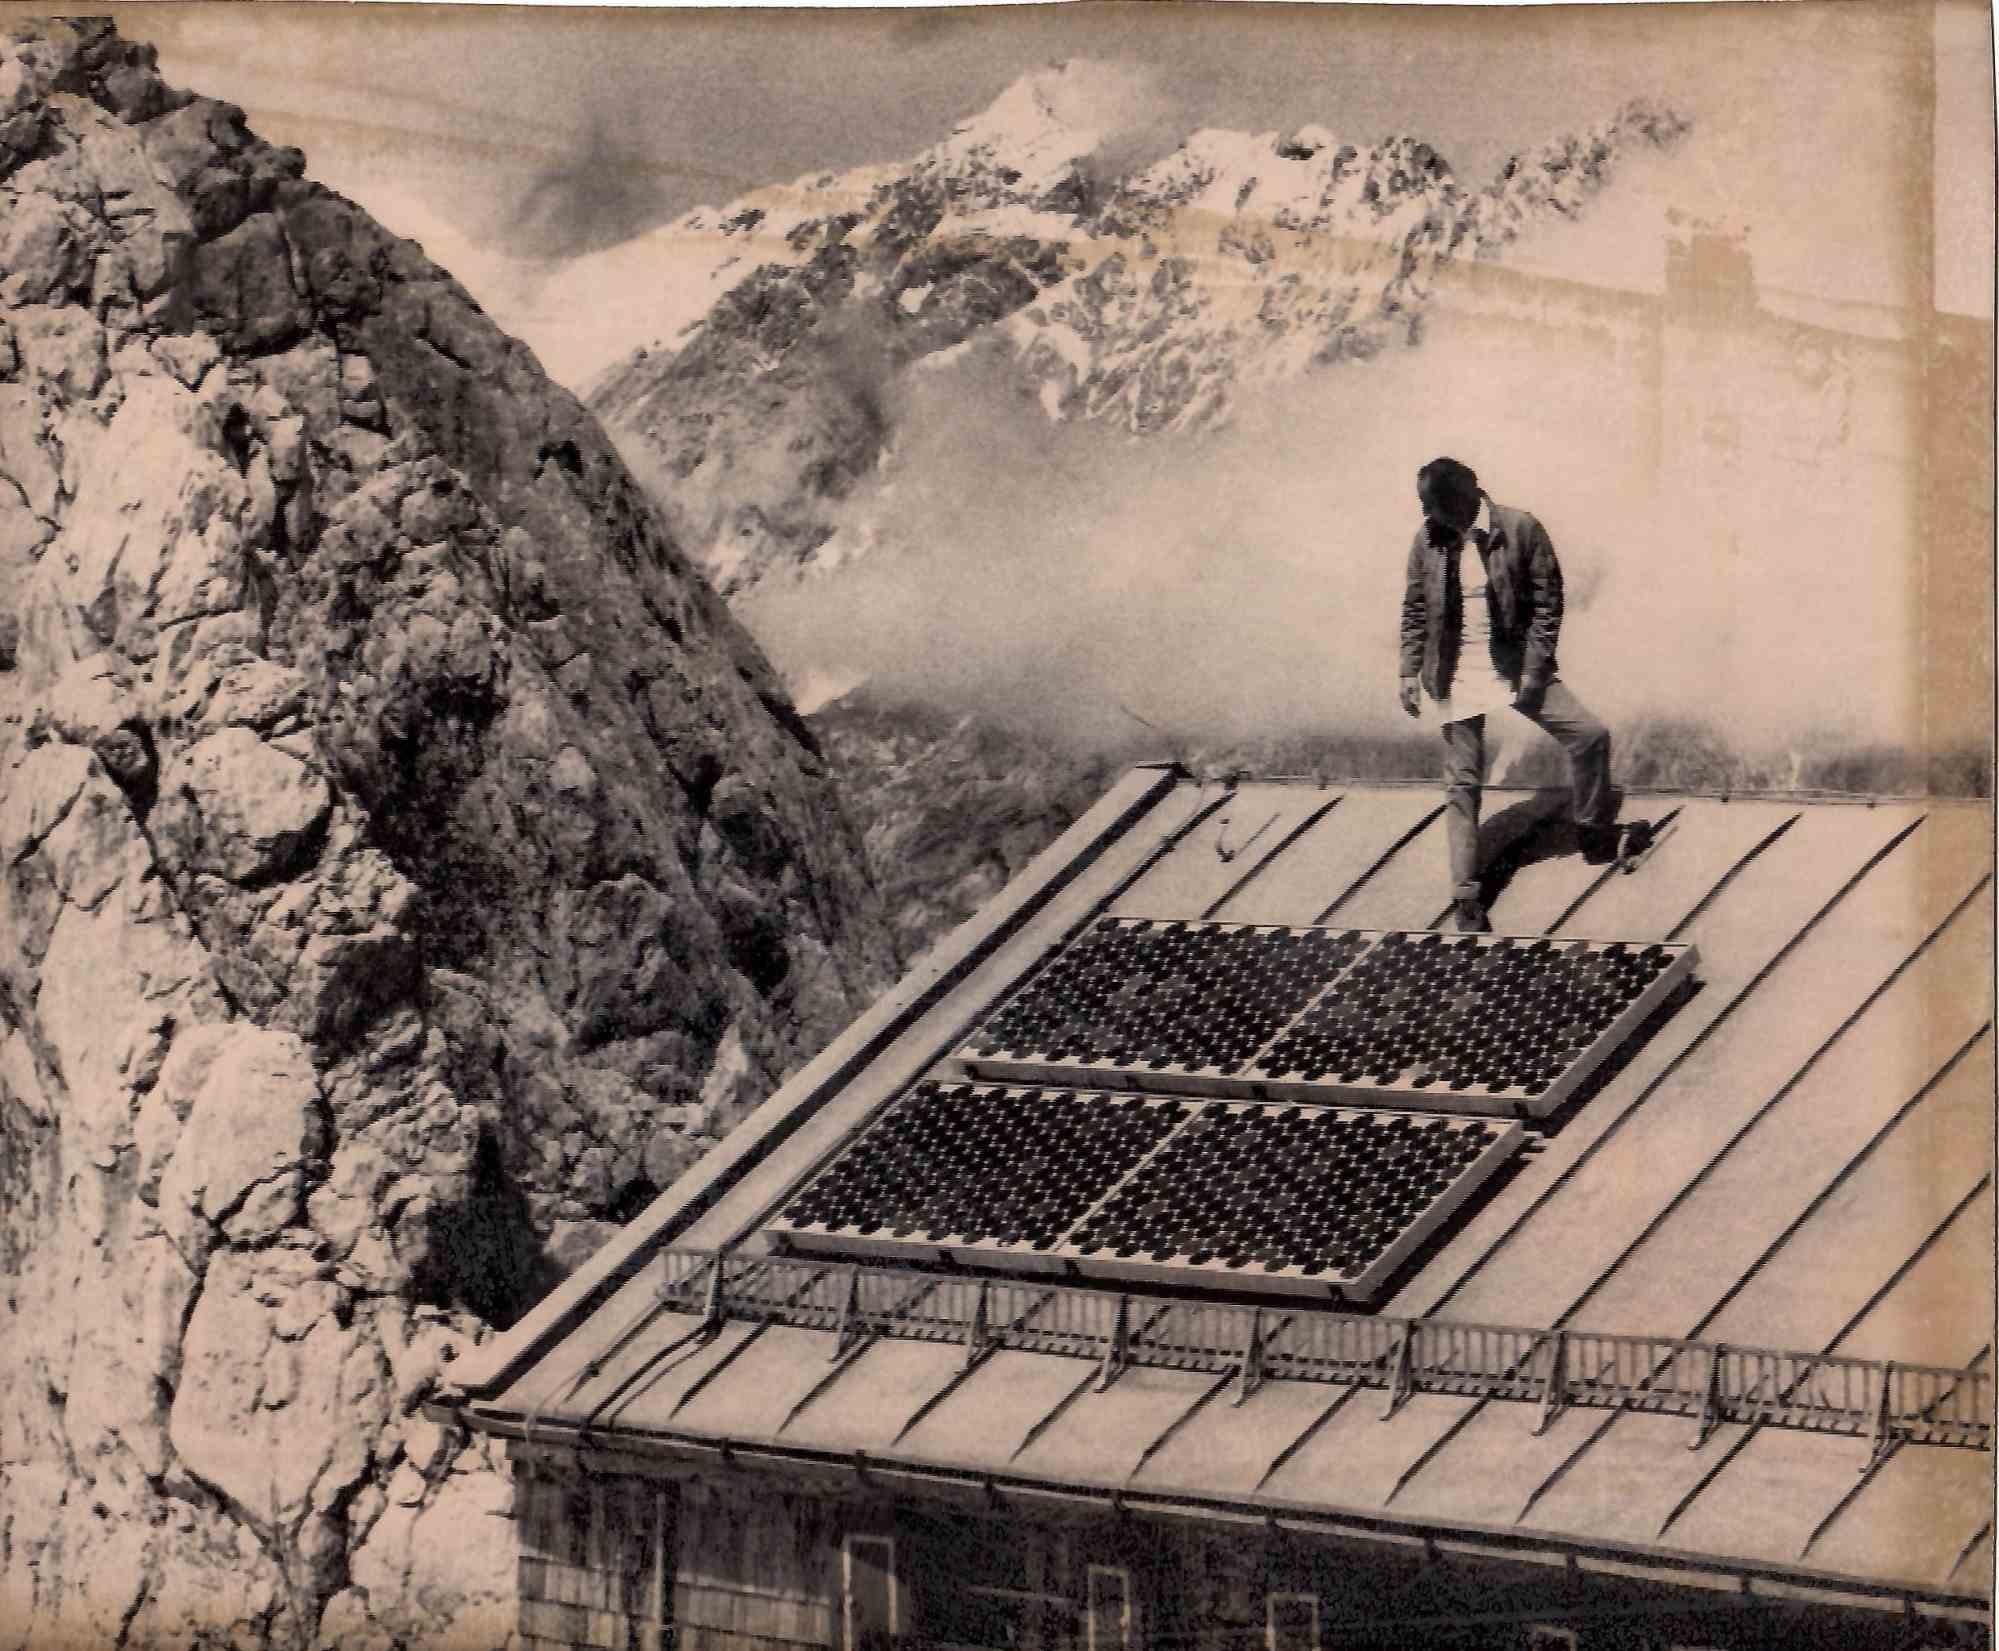 Unknown Landscape Photograph - Solar Power, Garmisch-Partenkirchen - Vintage Photograph - 1980s